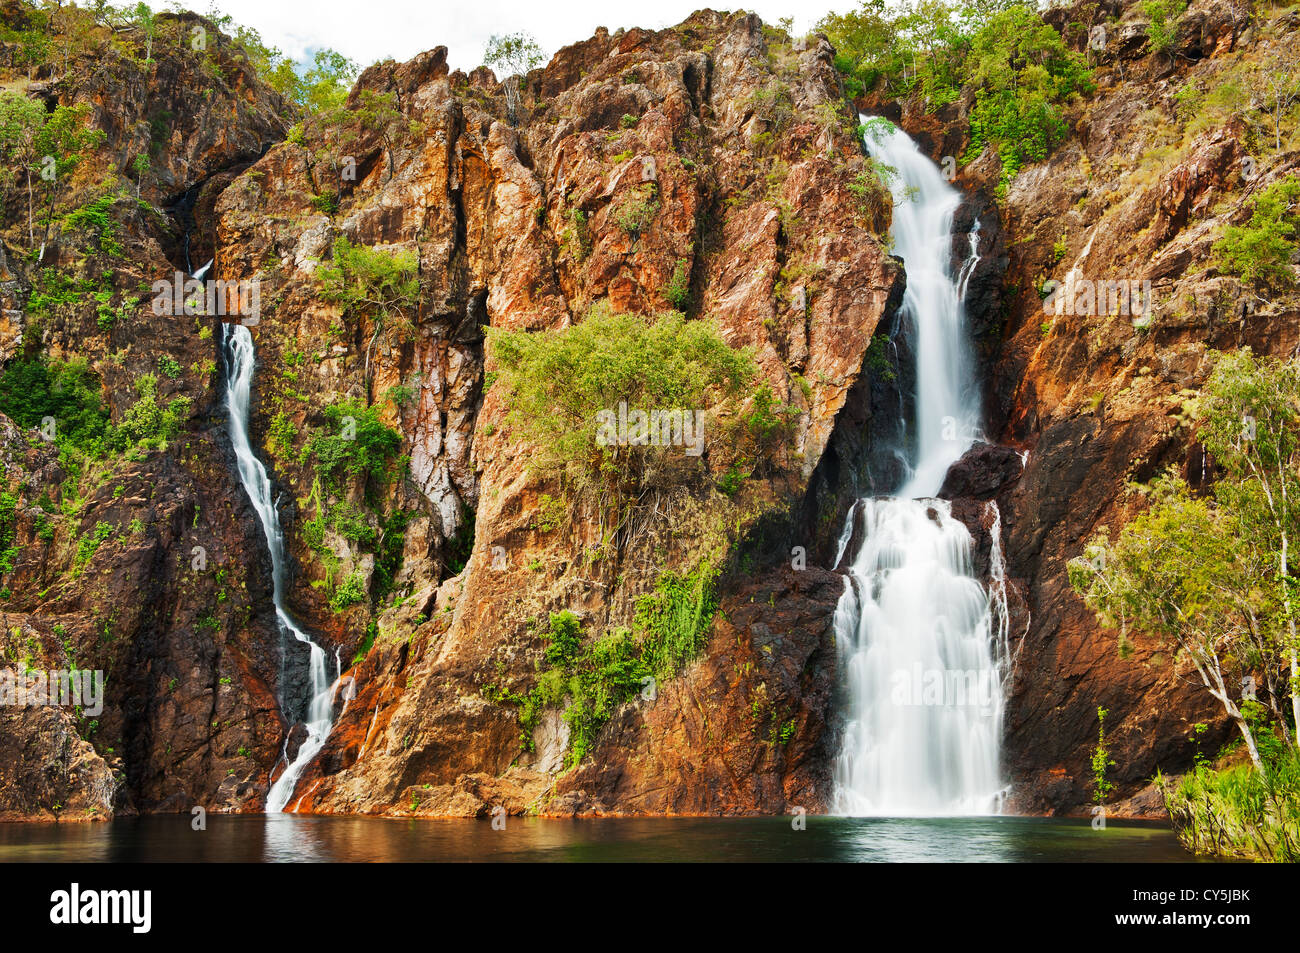 Wangi Falls at the beginning of the dry season. Stock Photo